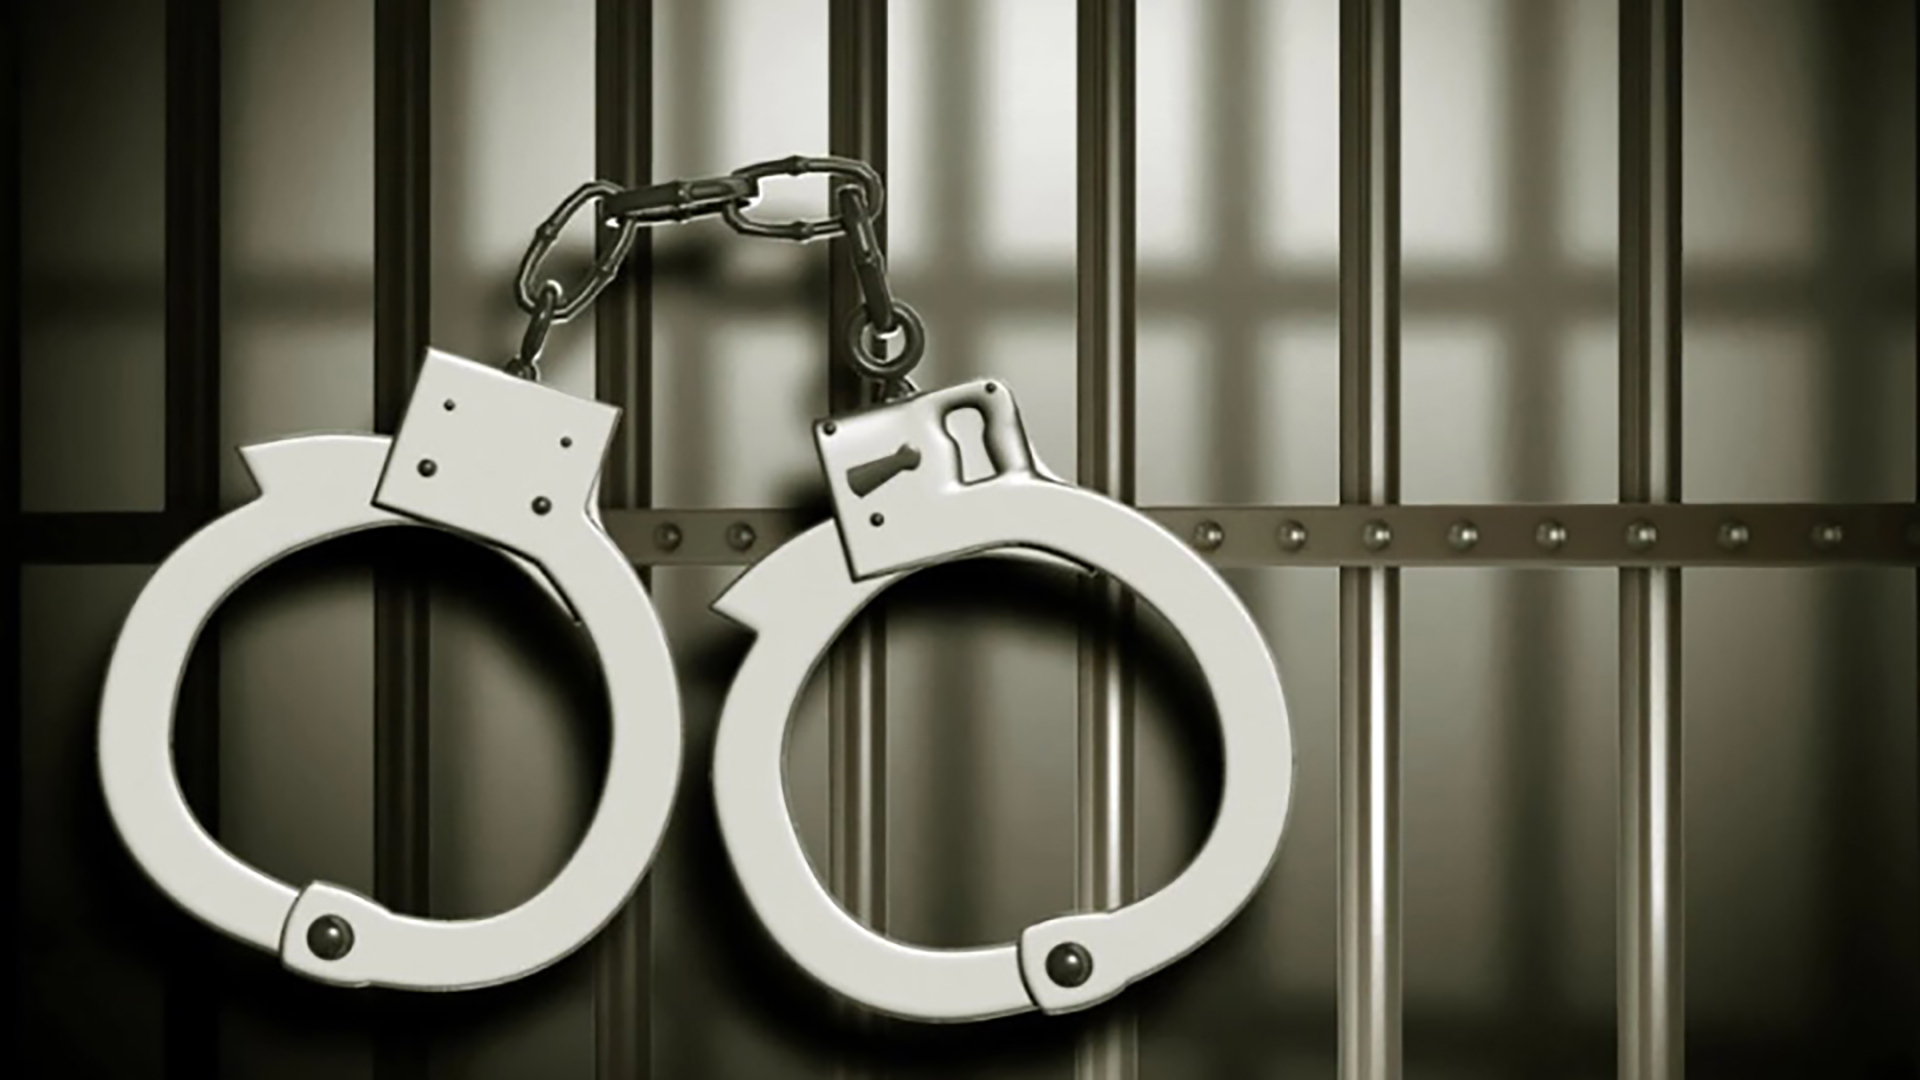 Absconder evading arrest since 15 years arrested in Kishtwar: Police – The  Dispatch